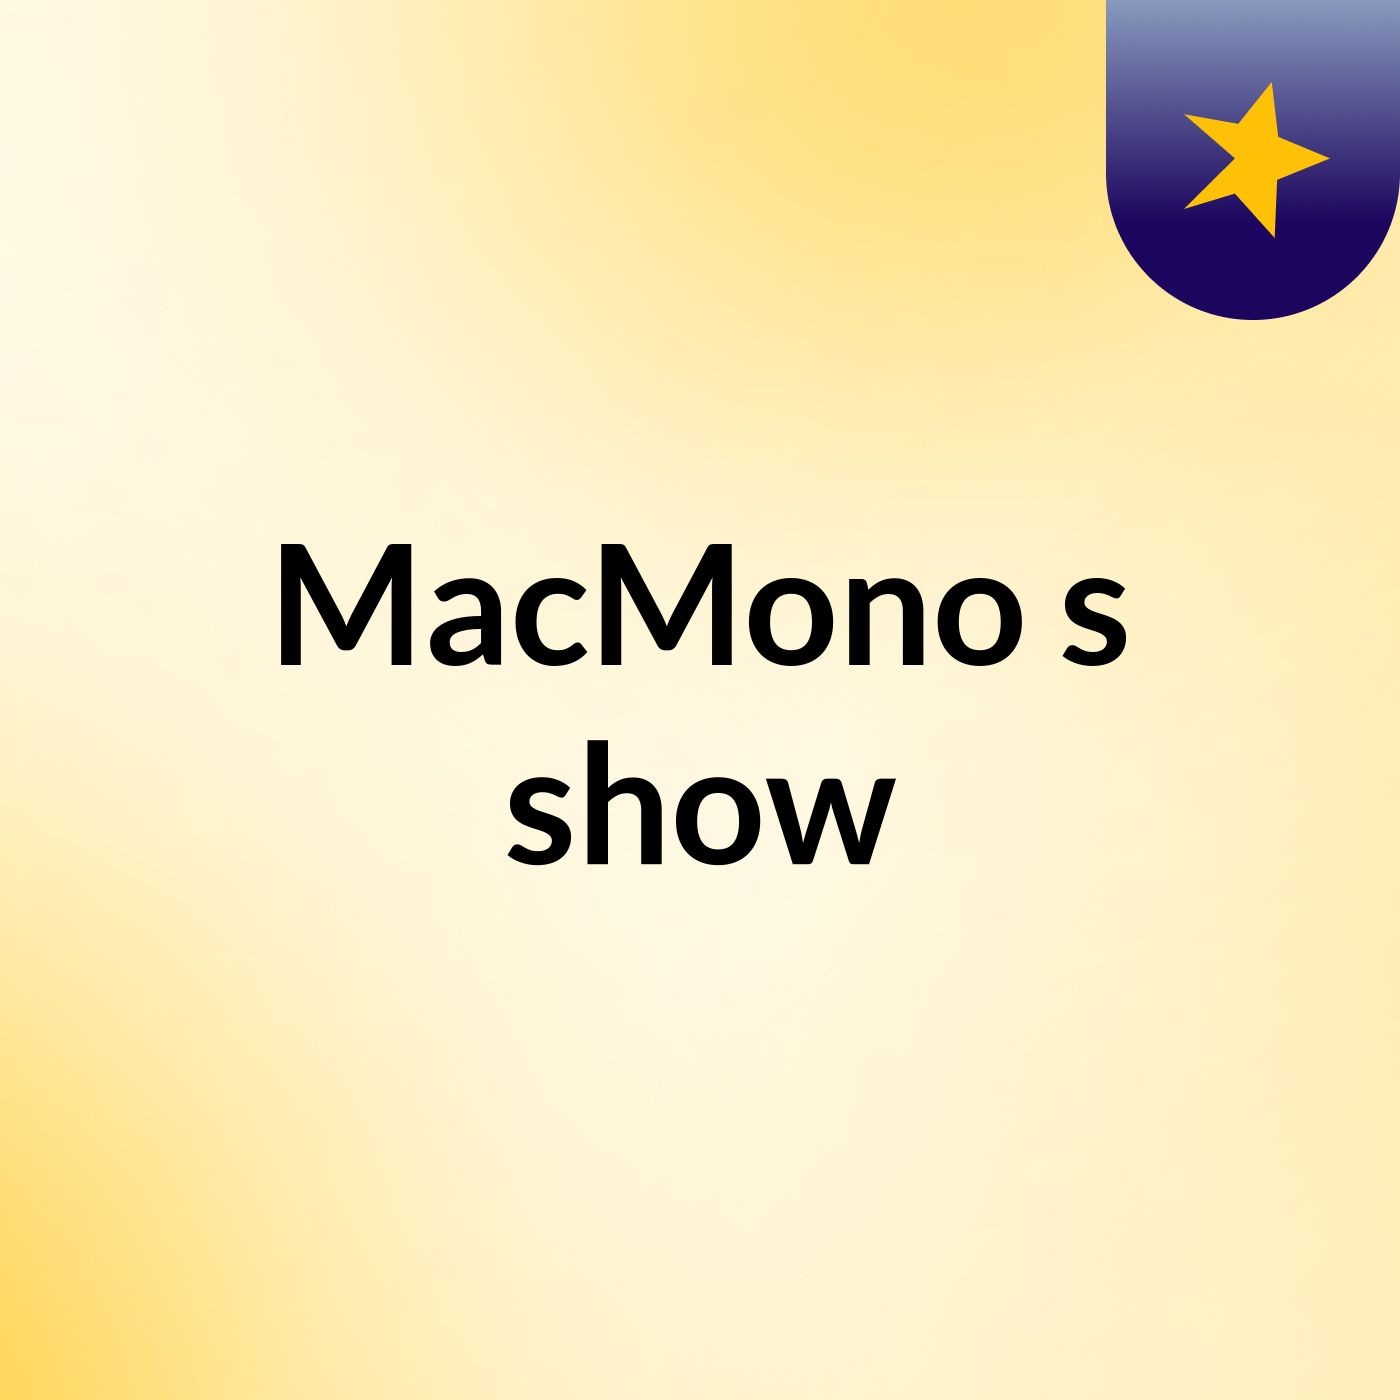 MacMono's show